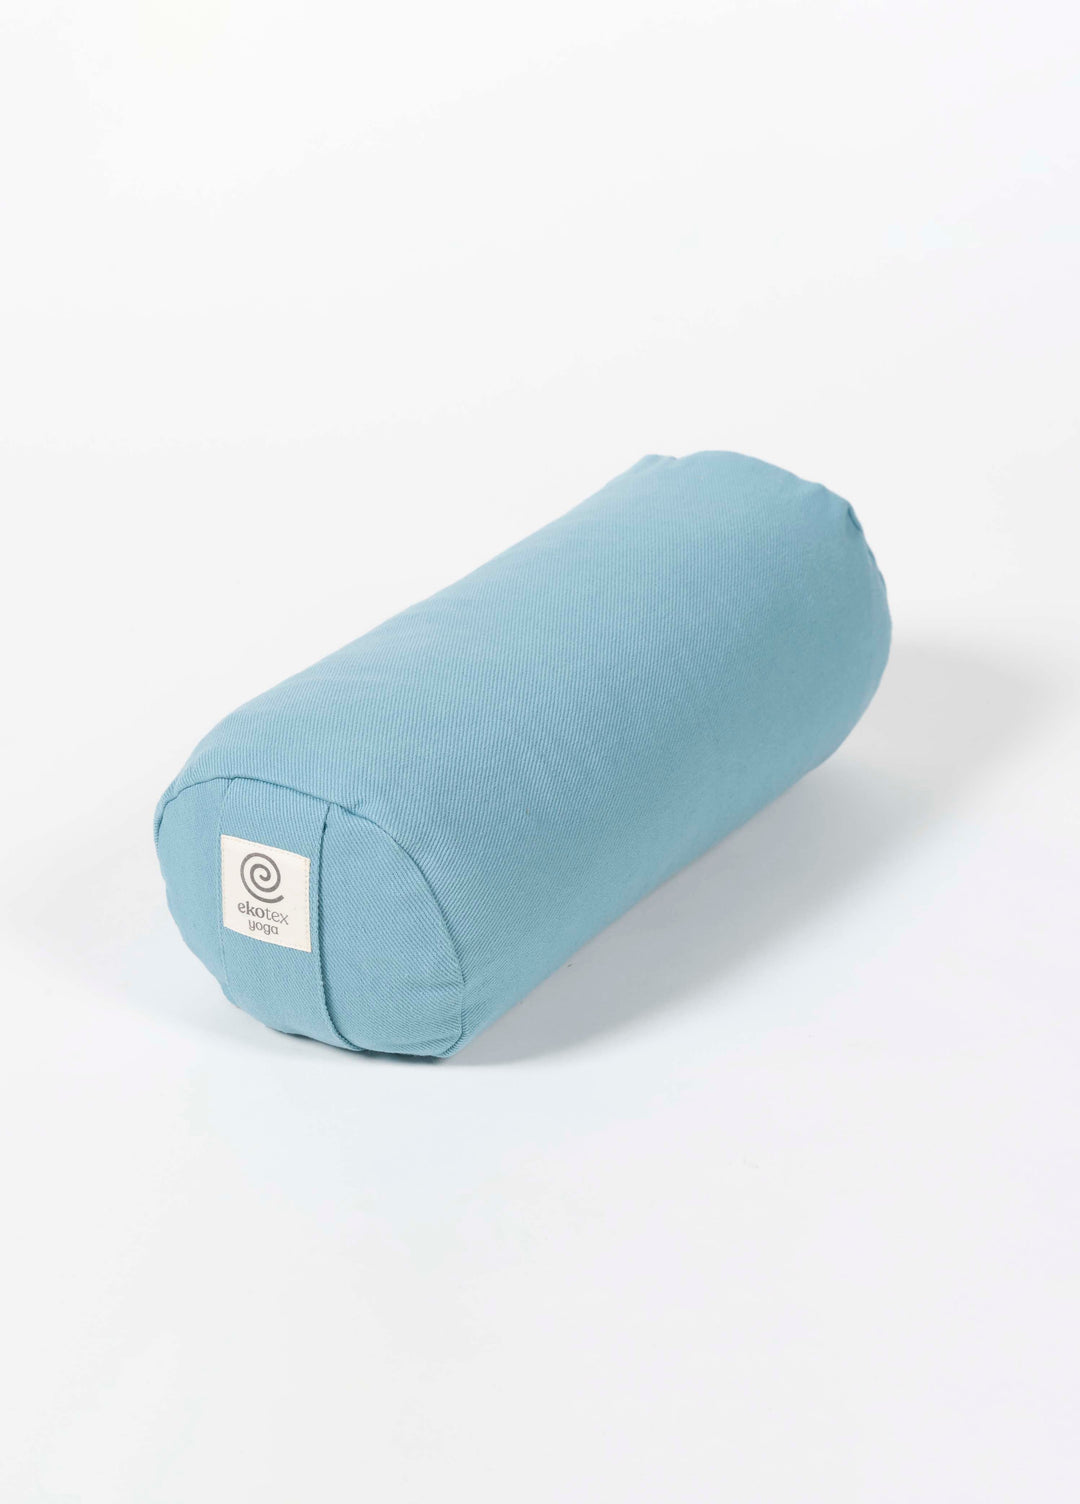 Organic Cotton Yoga Bolster Set: Standard Size with